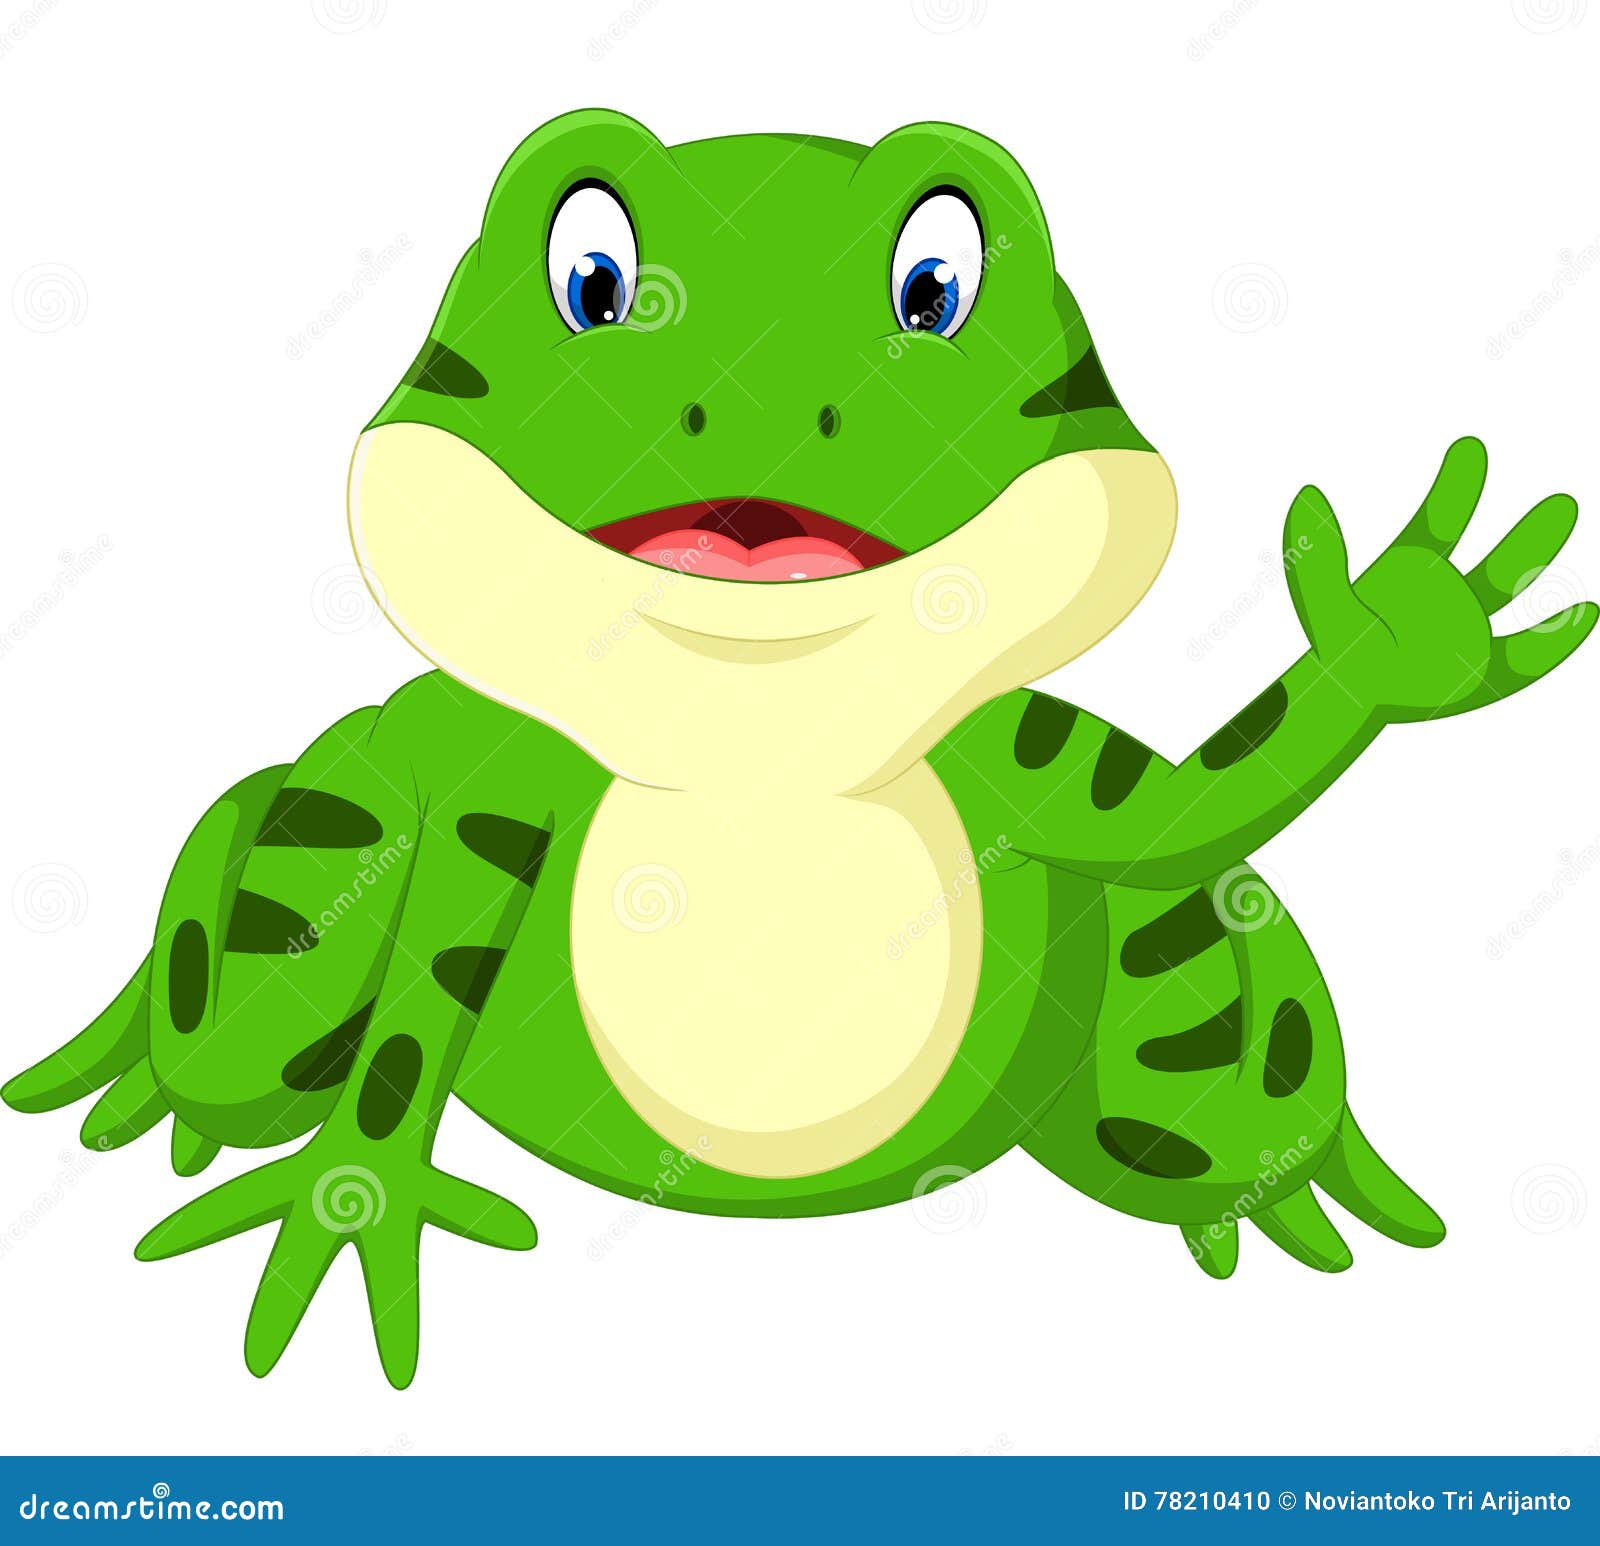 Cute frog cartoon stock vector. Illustration of cartoon - 78210410